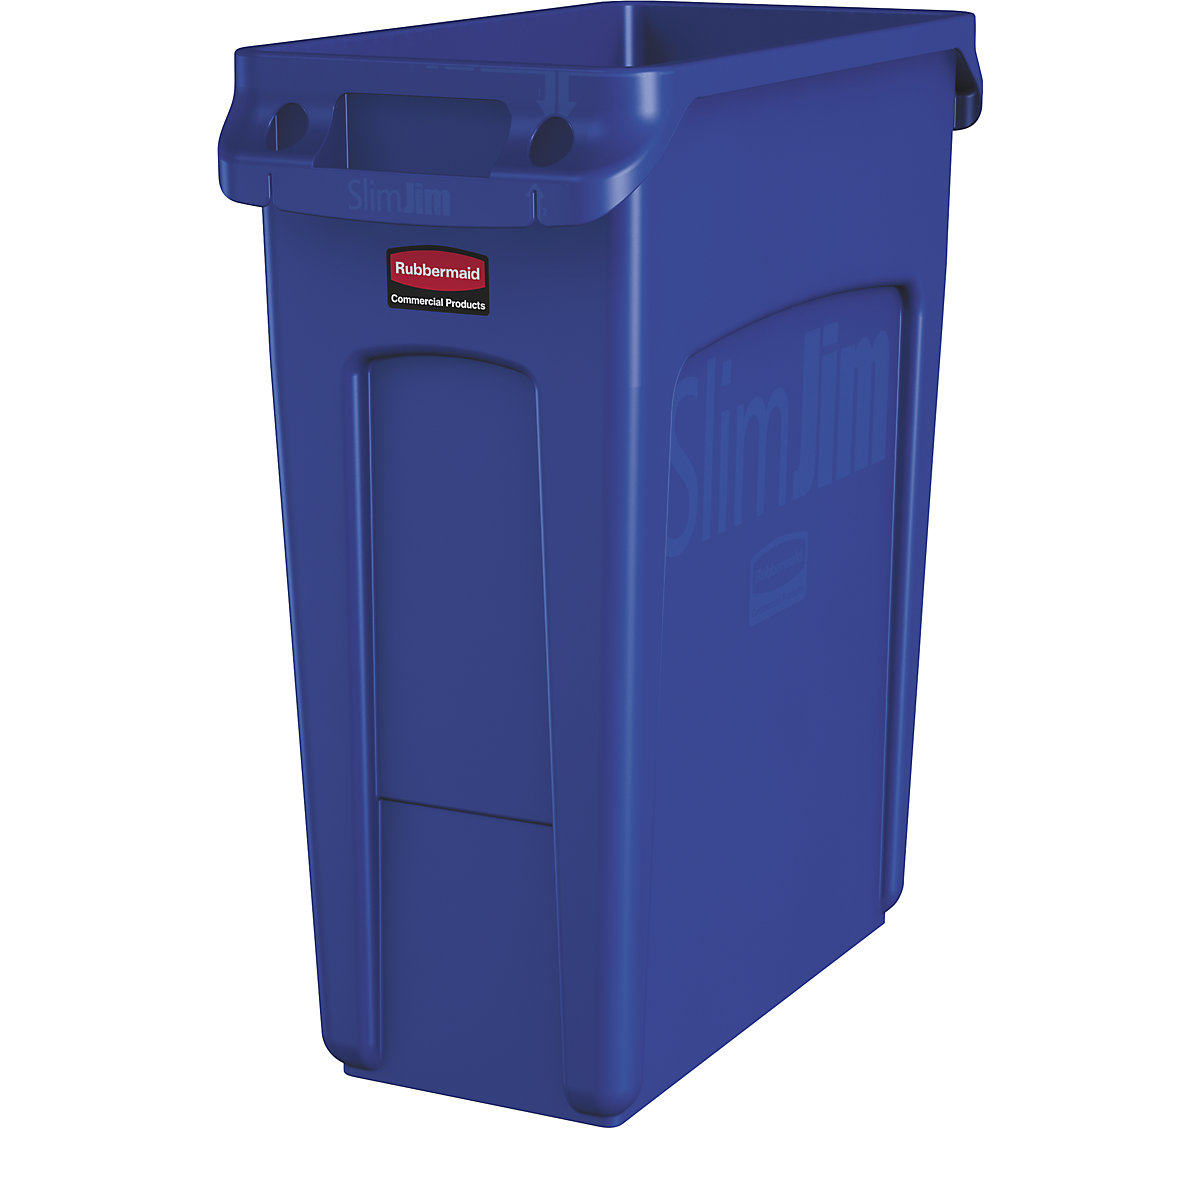 Zberač druhotných surovín/nádoba na odpad SLIM JIM® – Rubbermaid, objem 60 l, s vetracími kanálmi, modrá, od 10 ks-10